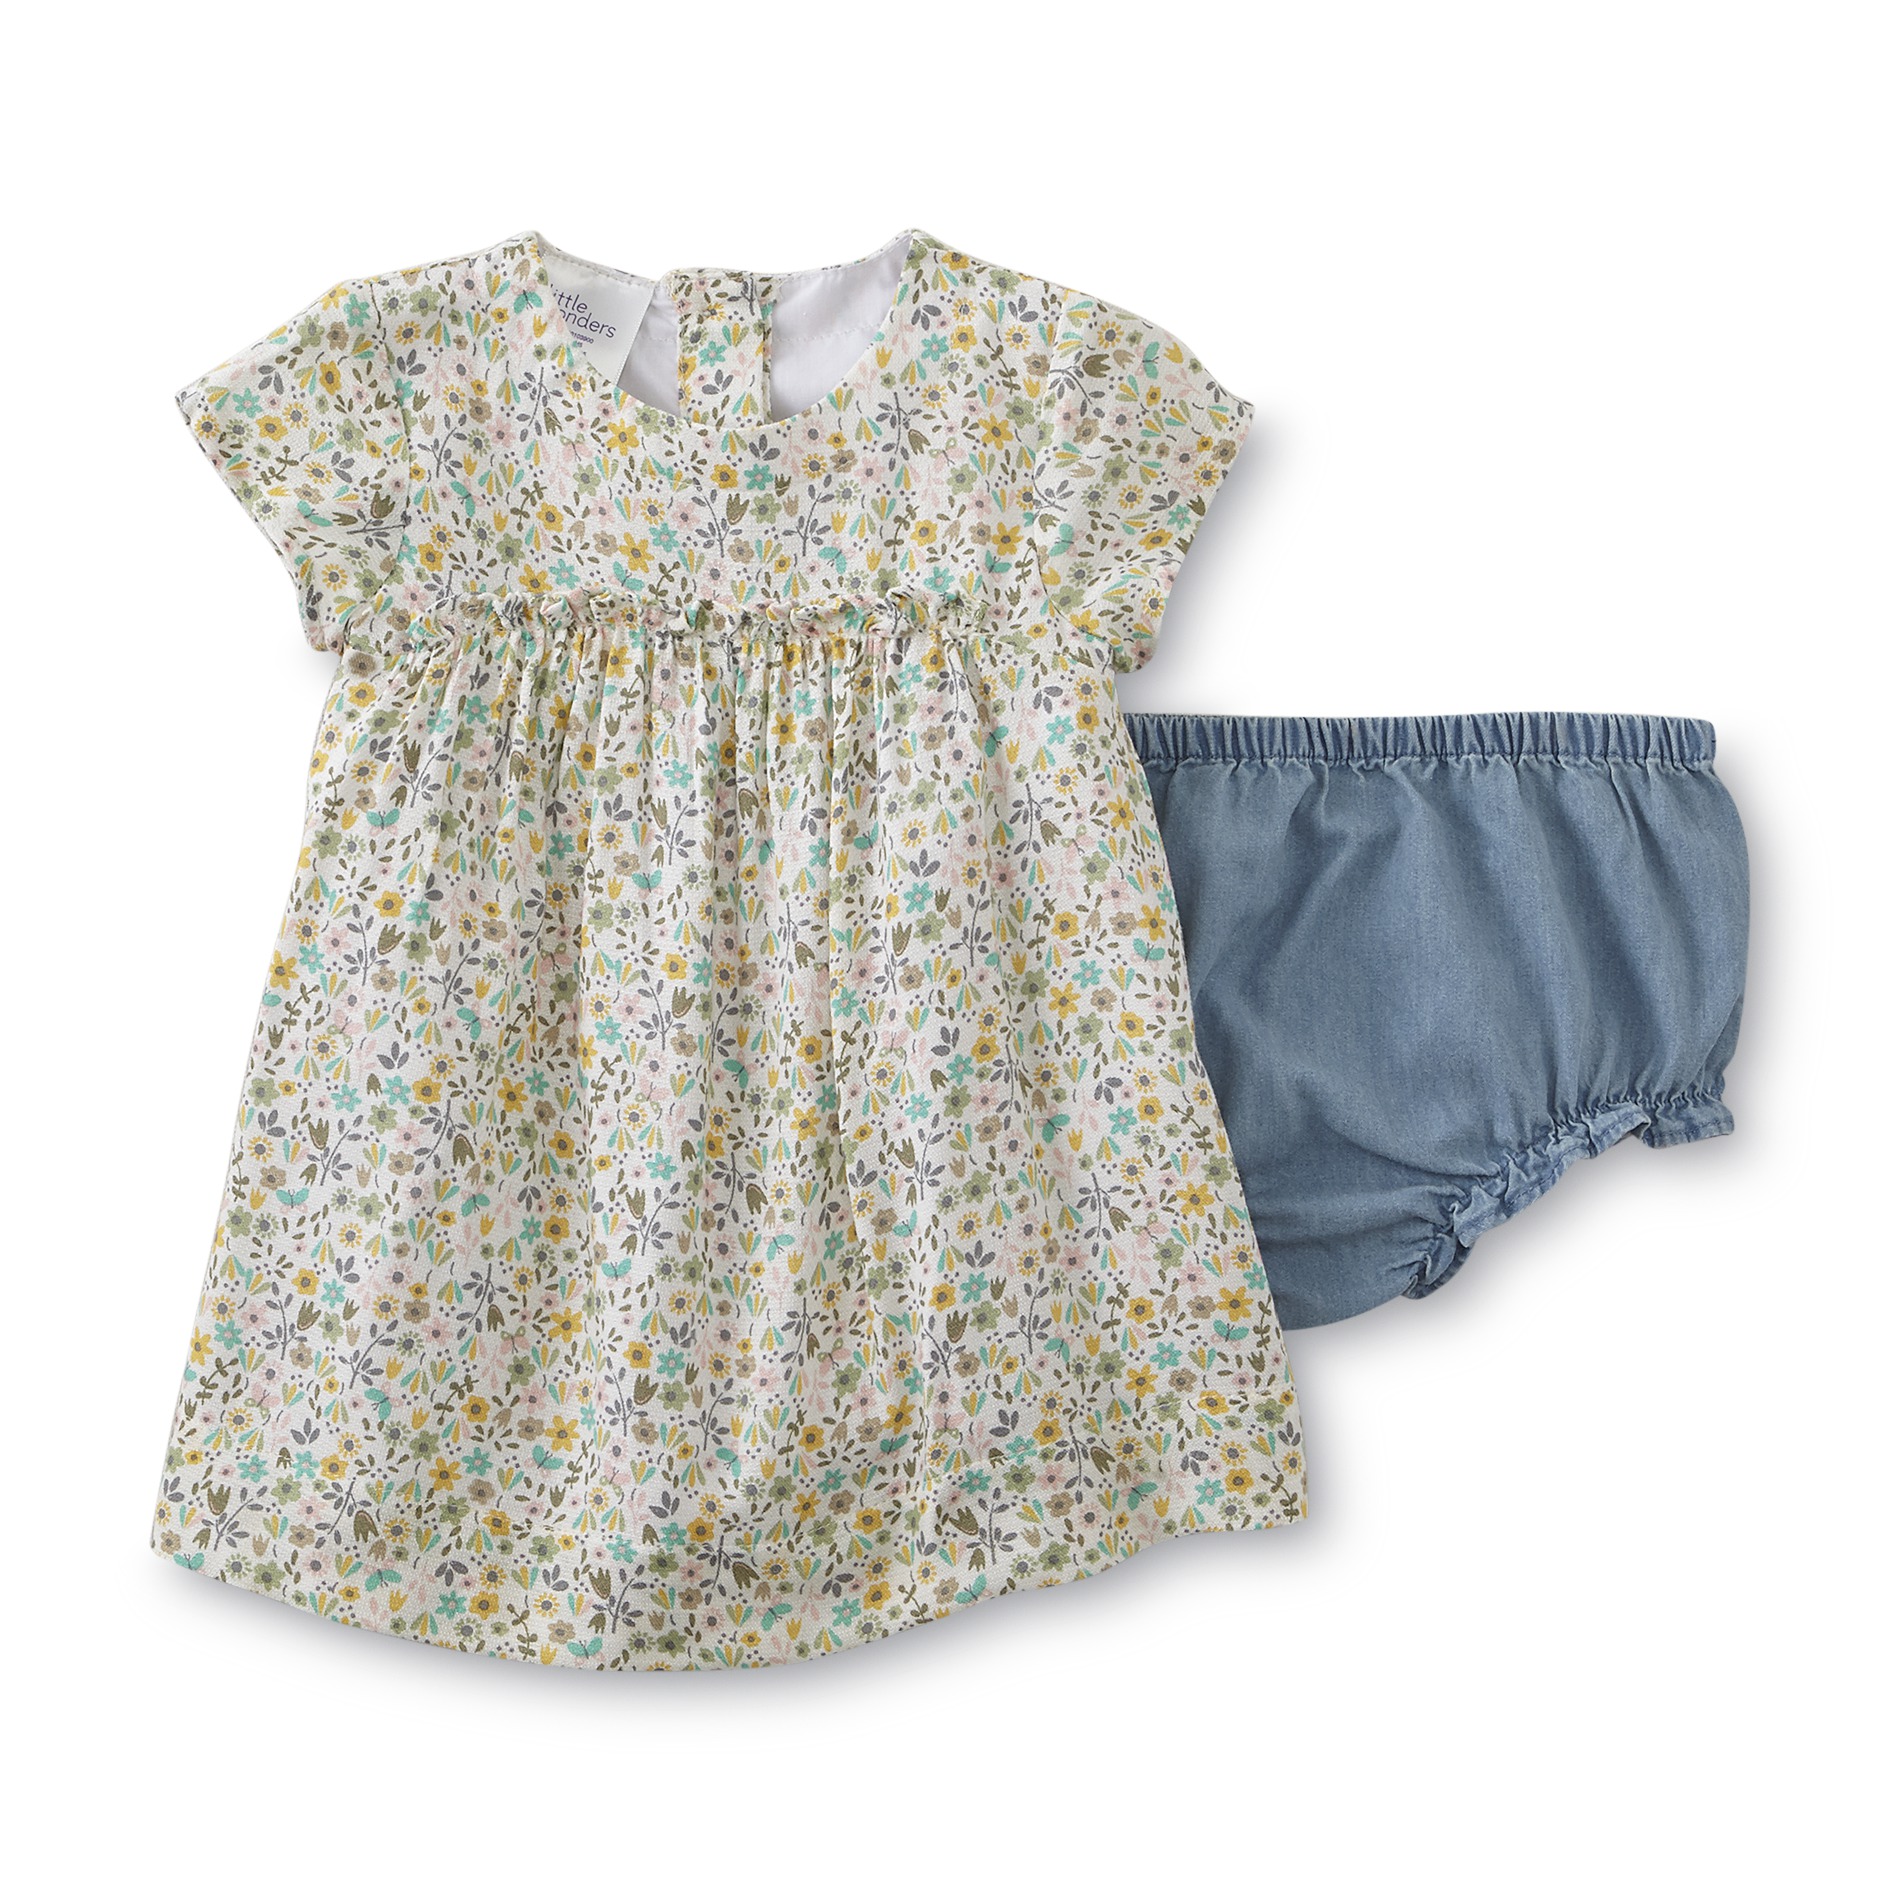 Little Wonders Newborn & Infant Girl's Dress & Diaper Cover - Floral